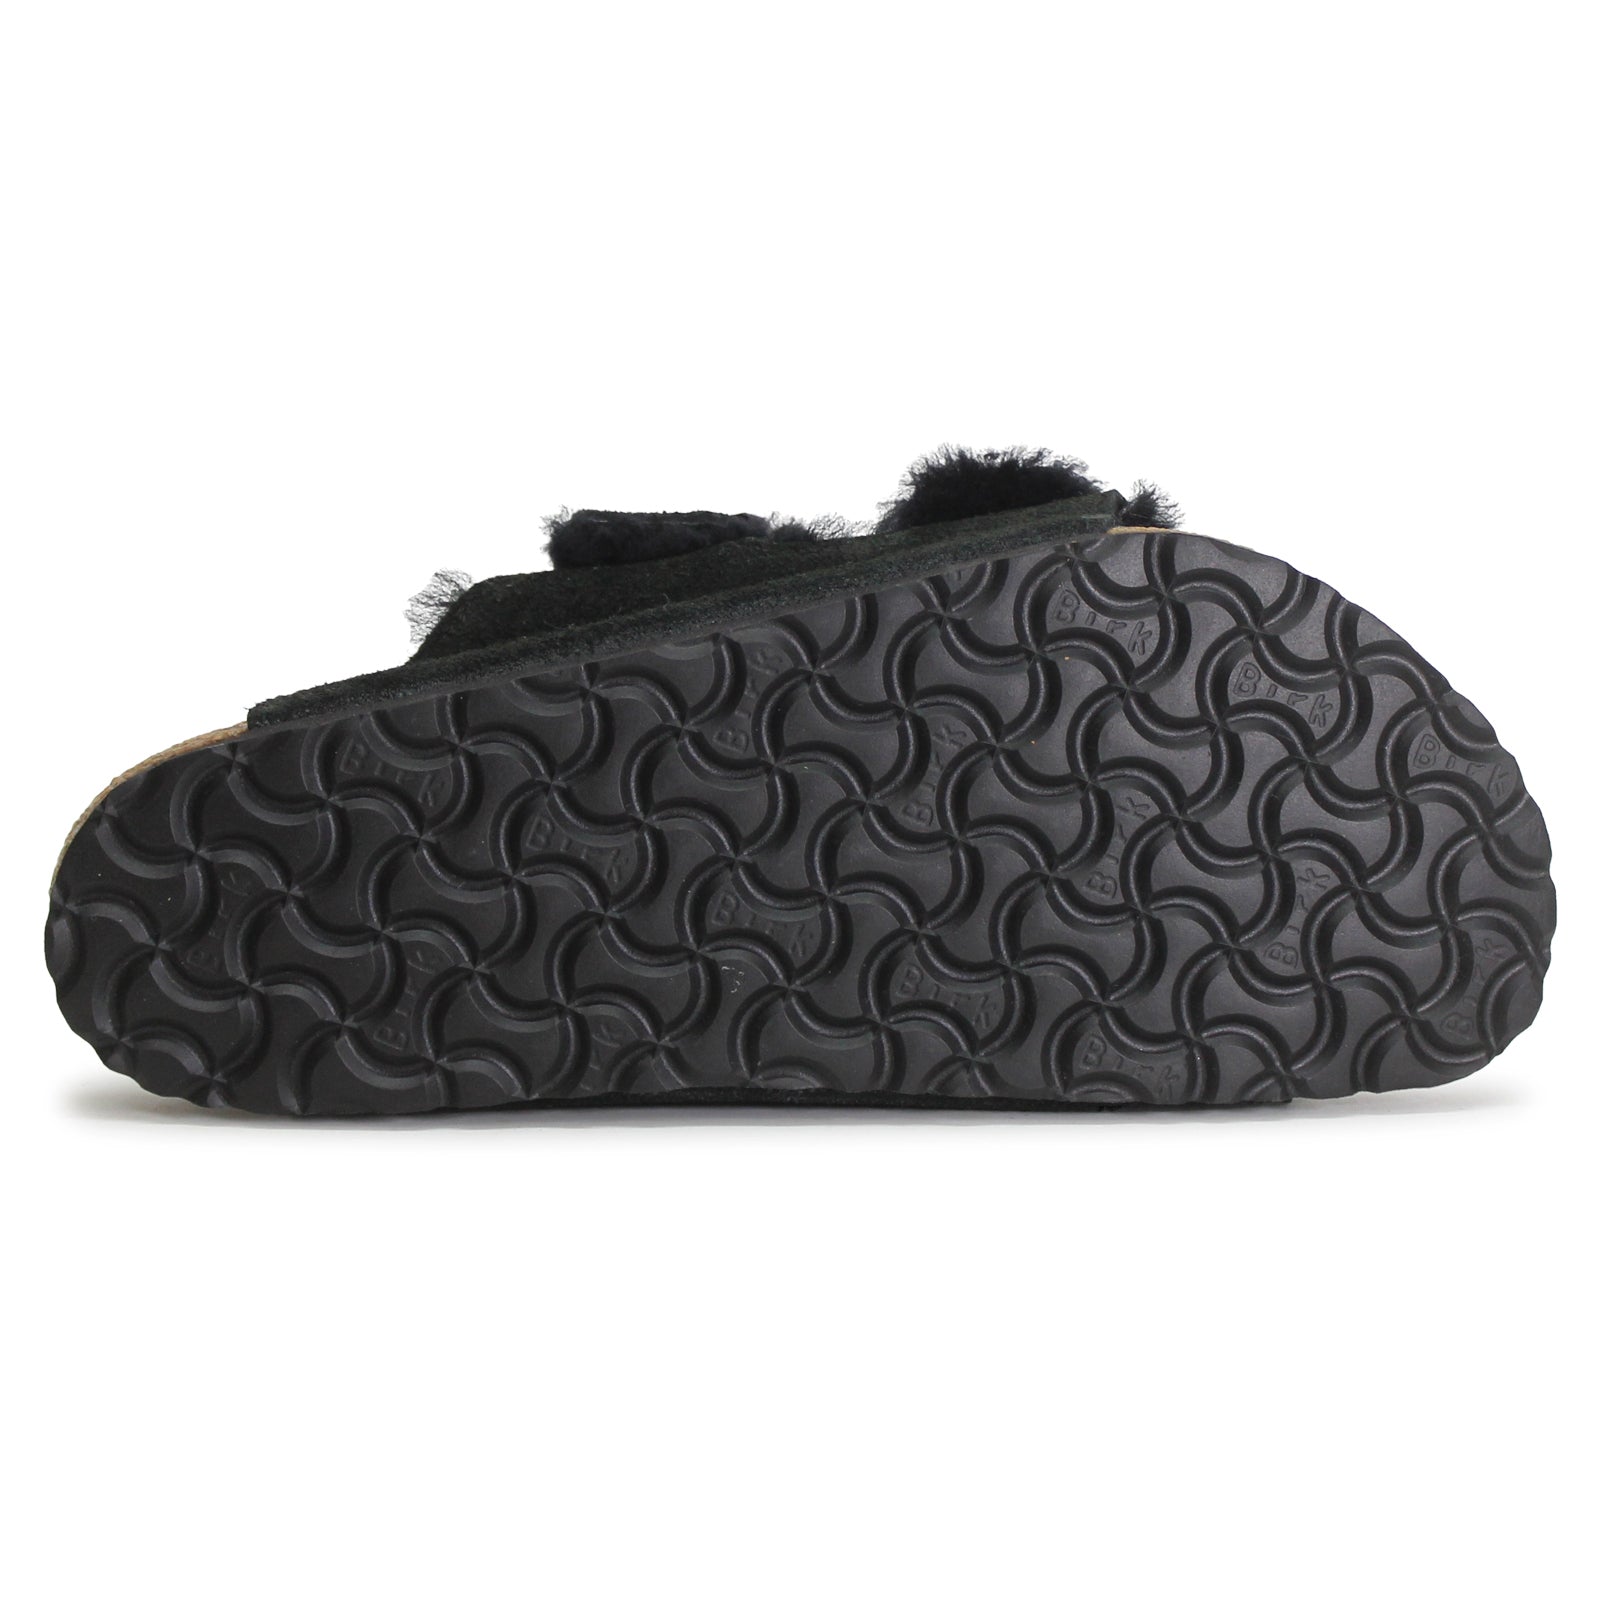 Birkenstock Arizona Fur Suede Unisex Sandals#color_black